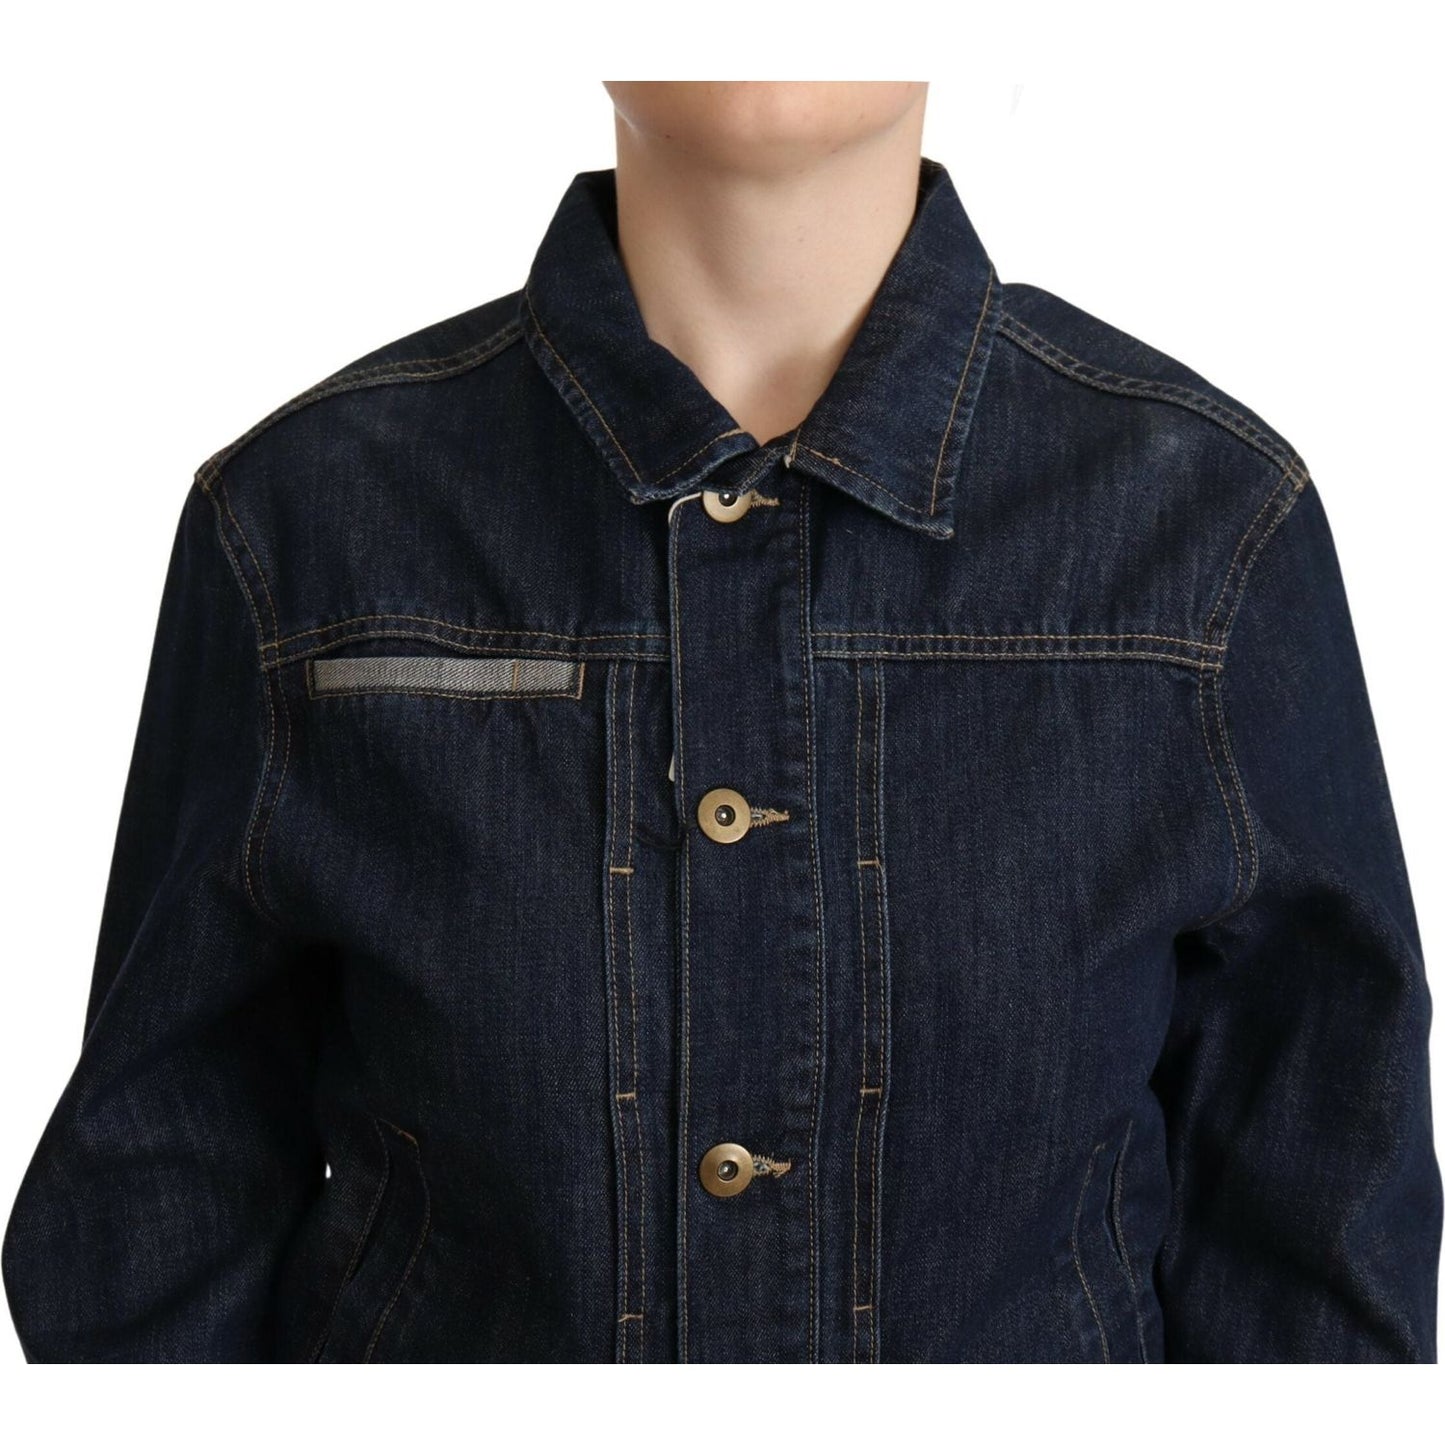 Master Coat Chic Dark Blue Denim Jacket dark-blue-button-down-long-sleeves-denim-jacket-1 IMG_3510-scaled-9d25a0dc-fbd.jpg